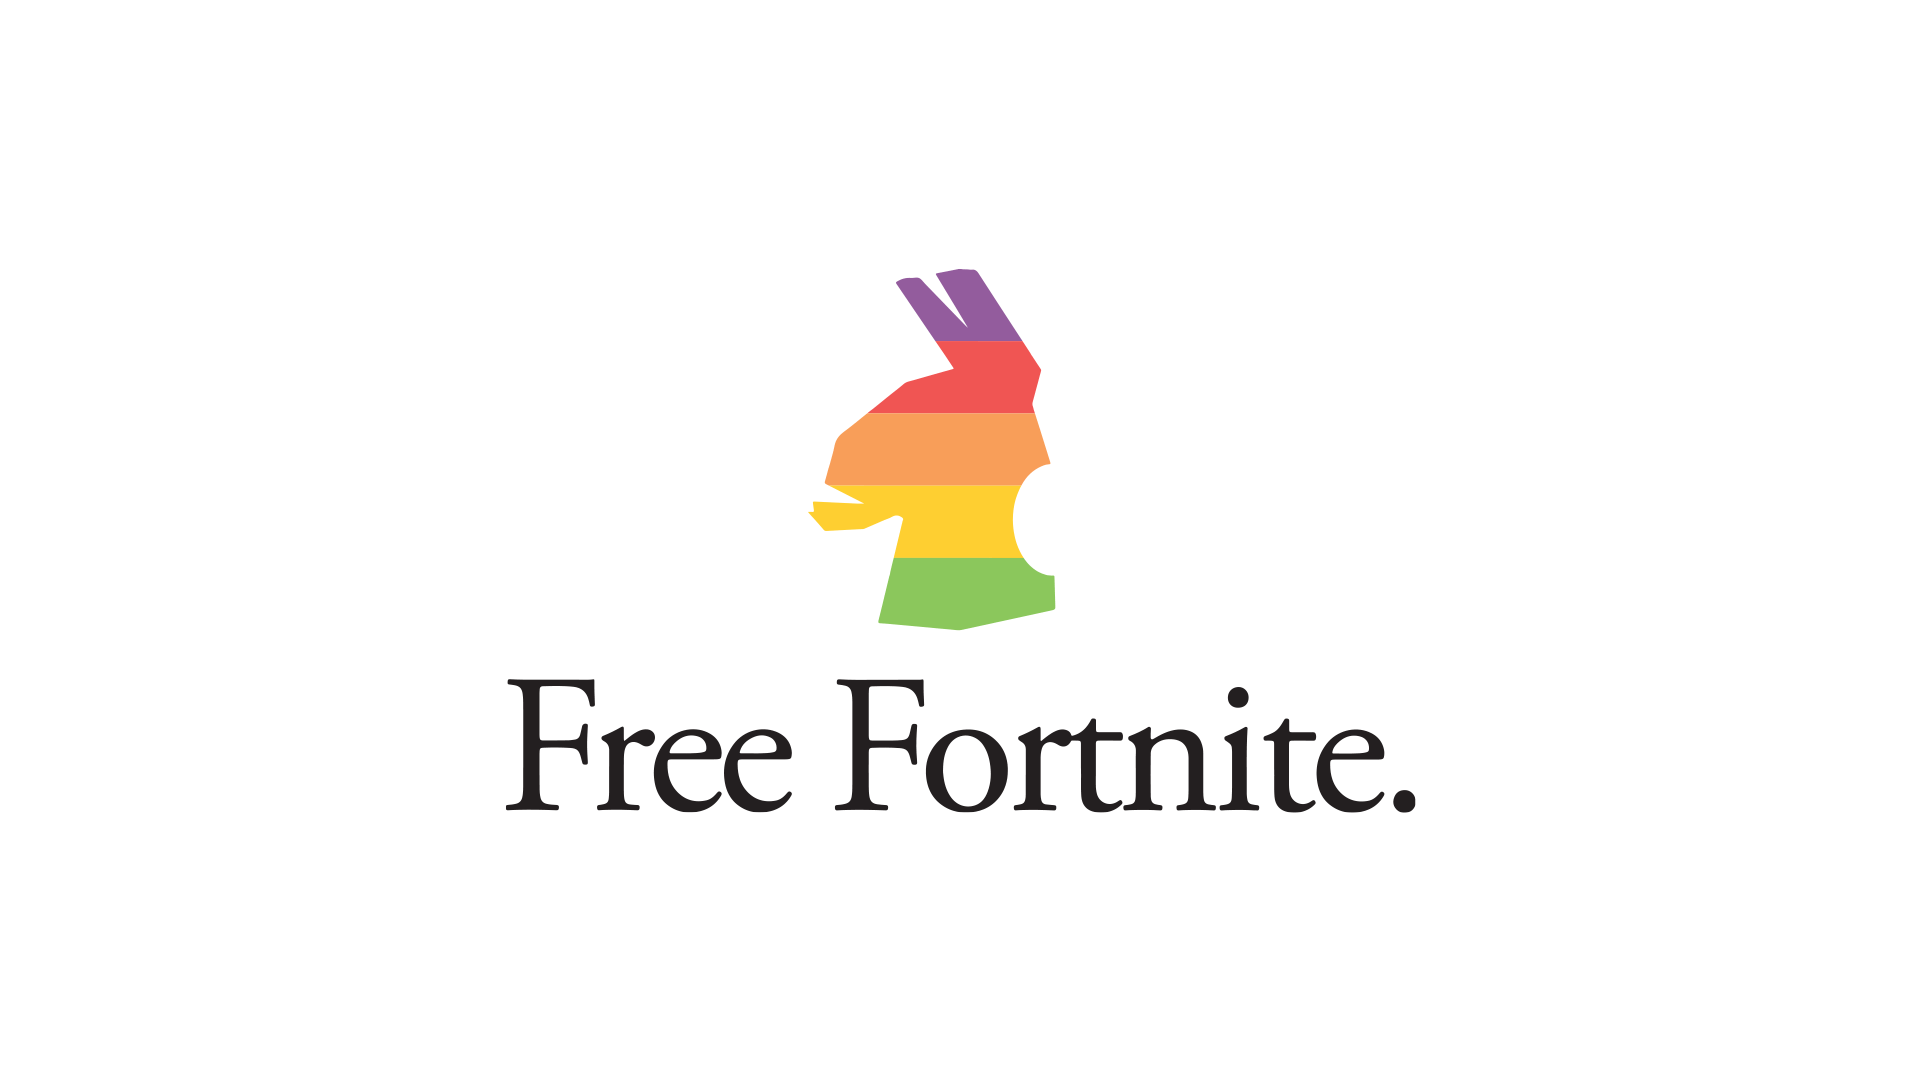 Movimento "Free Fortnite" satirizava logomarca da Apple